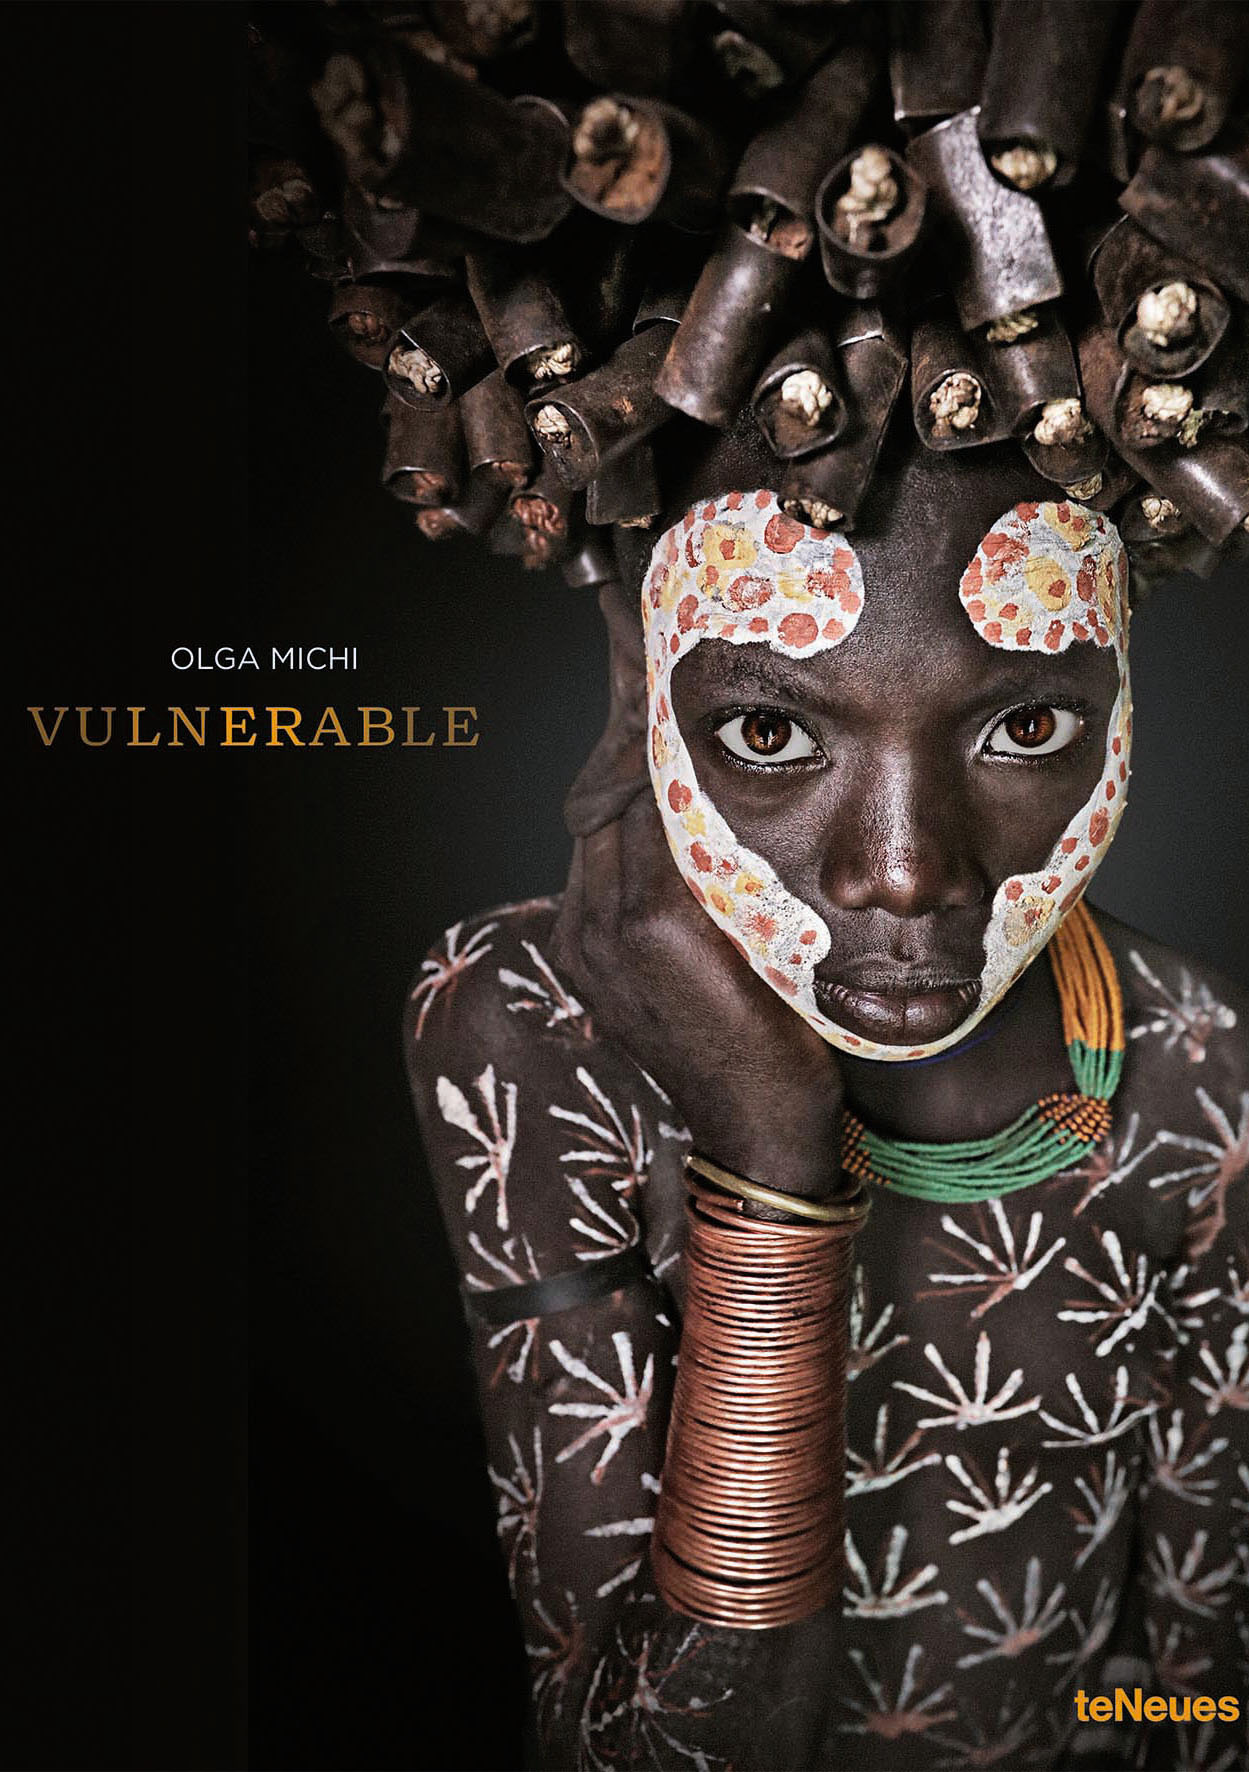 Vulnerable by Olga Michi